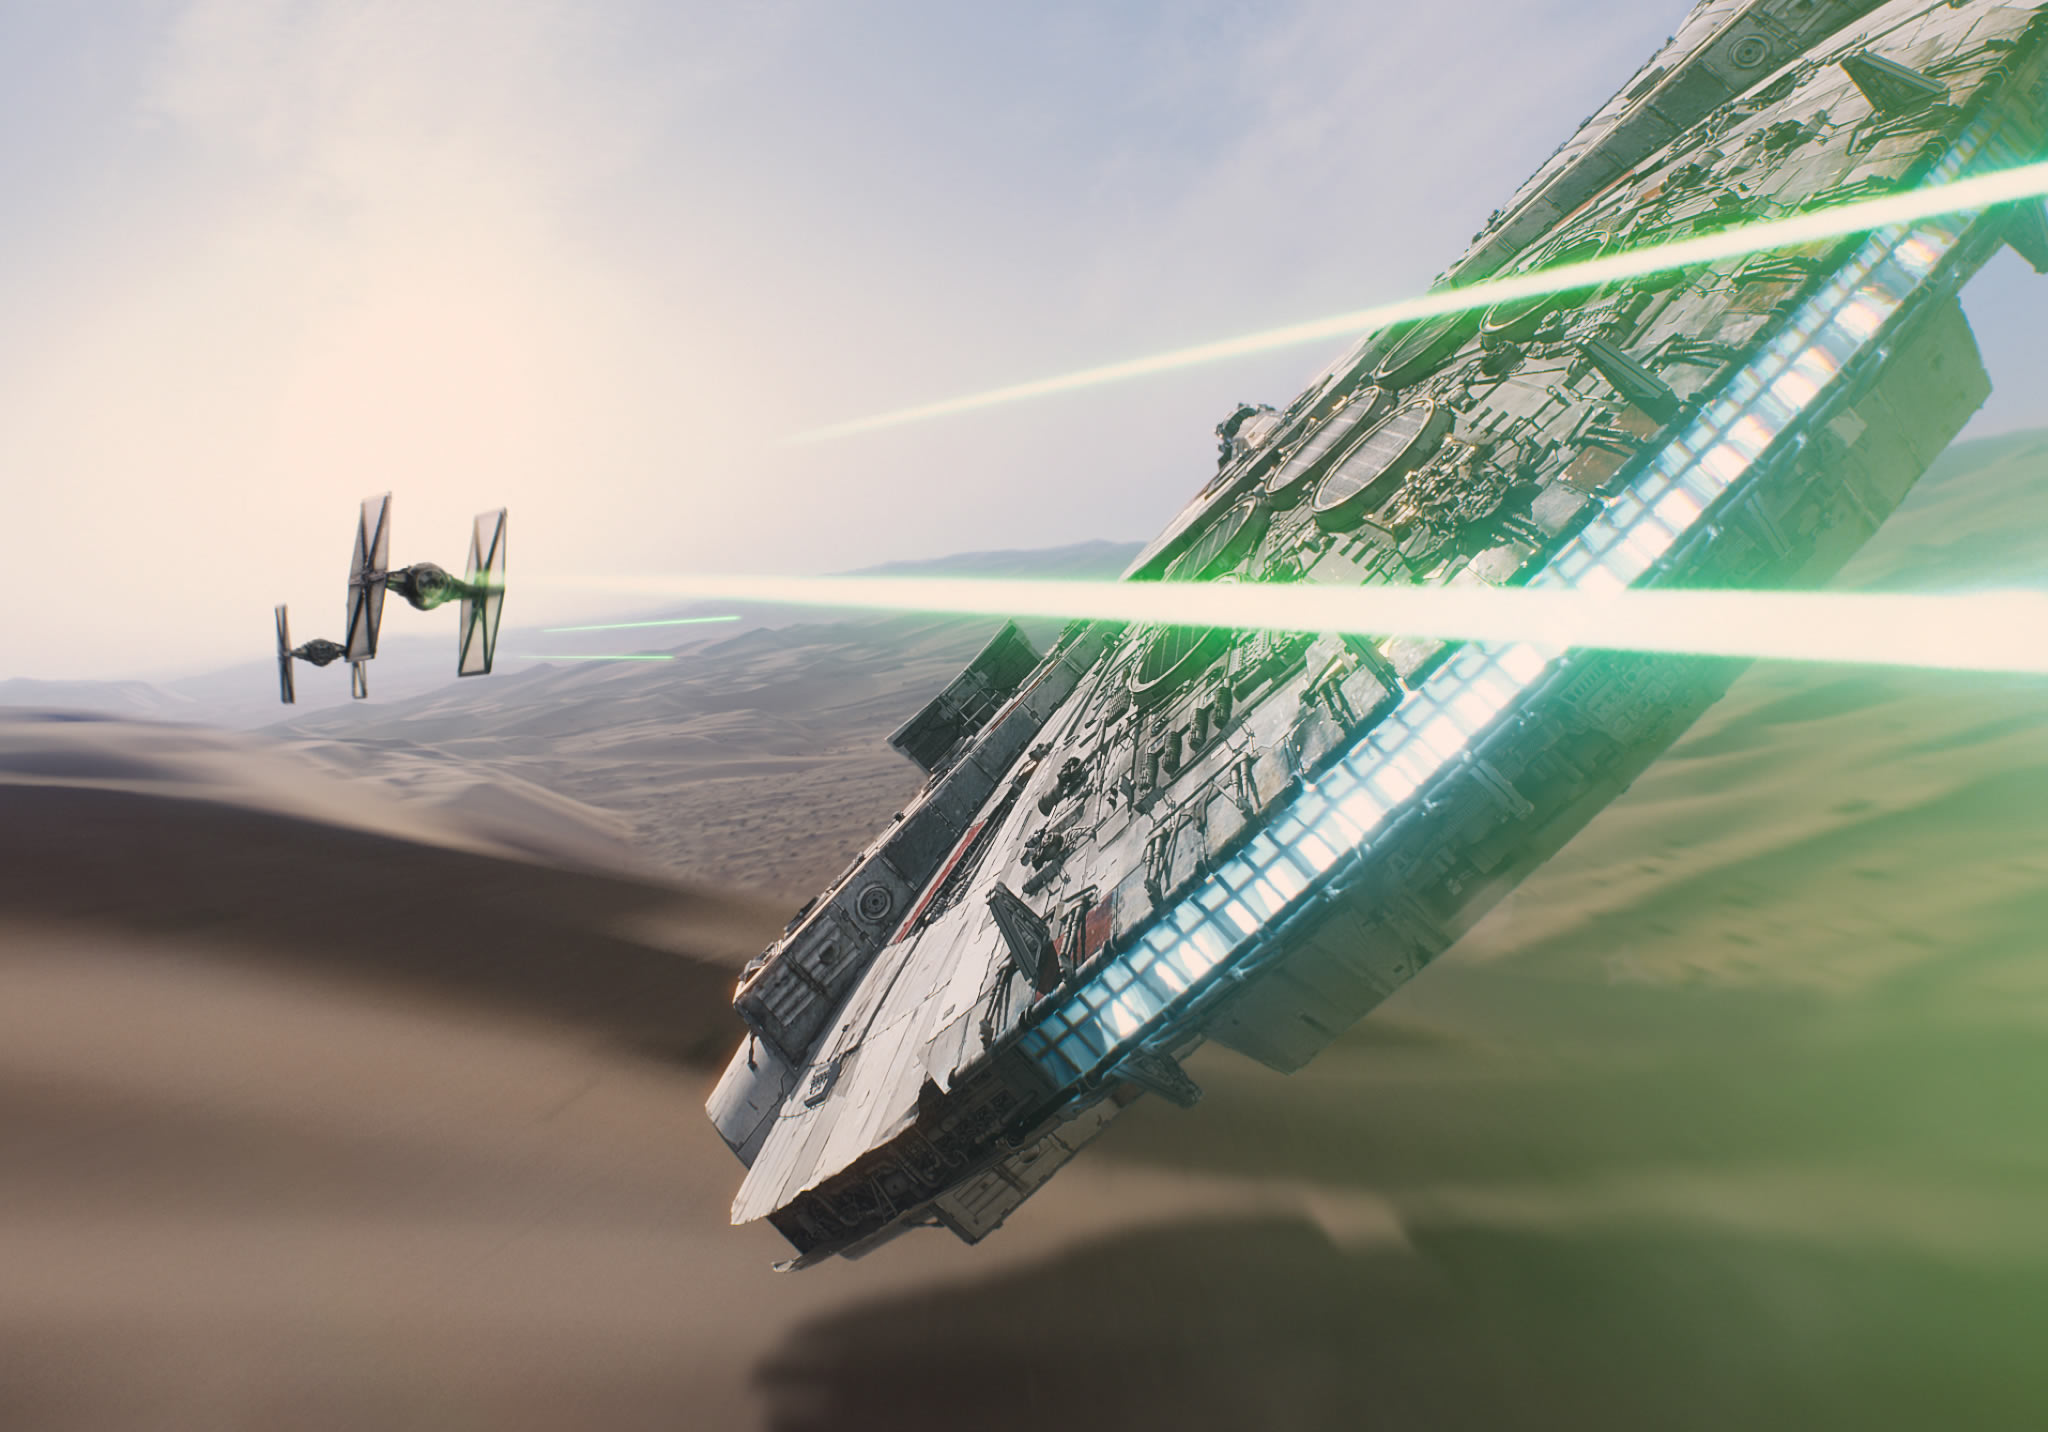 spaceship battle in star wars vii the force awakens